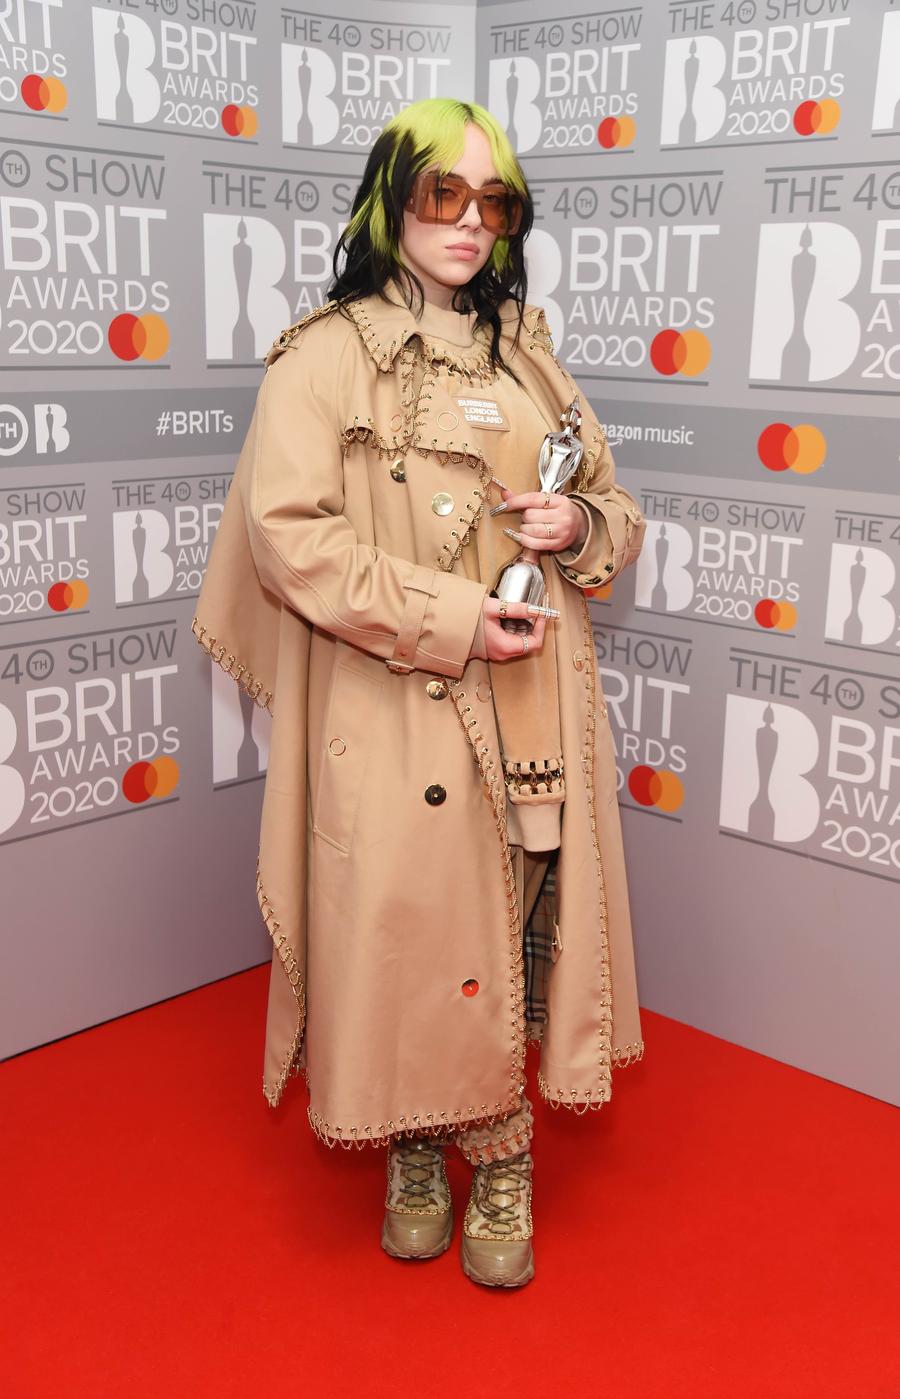 Billie Eilish In Burberry 2020 The Brit Awards Fashionsizzle